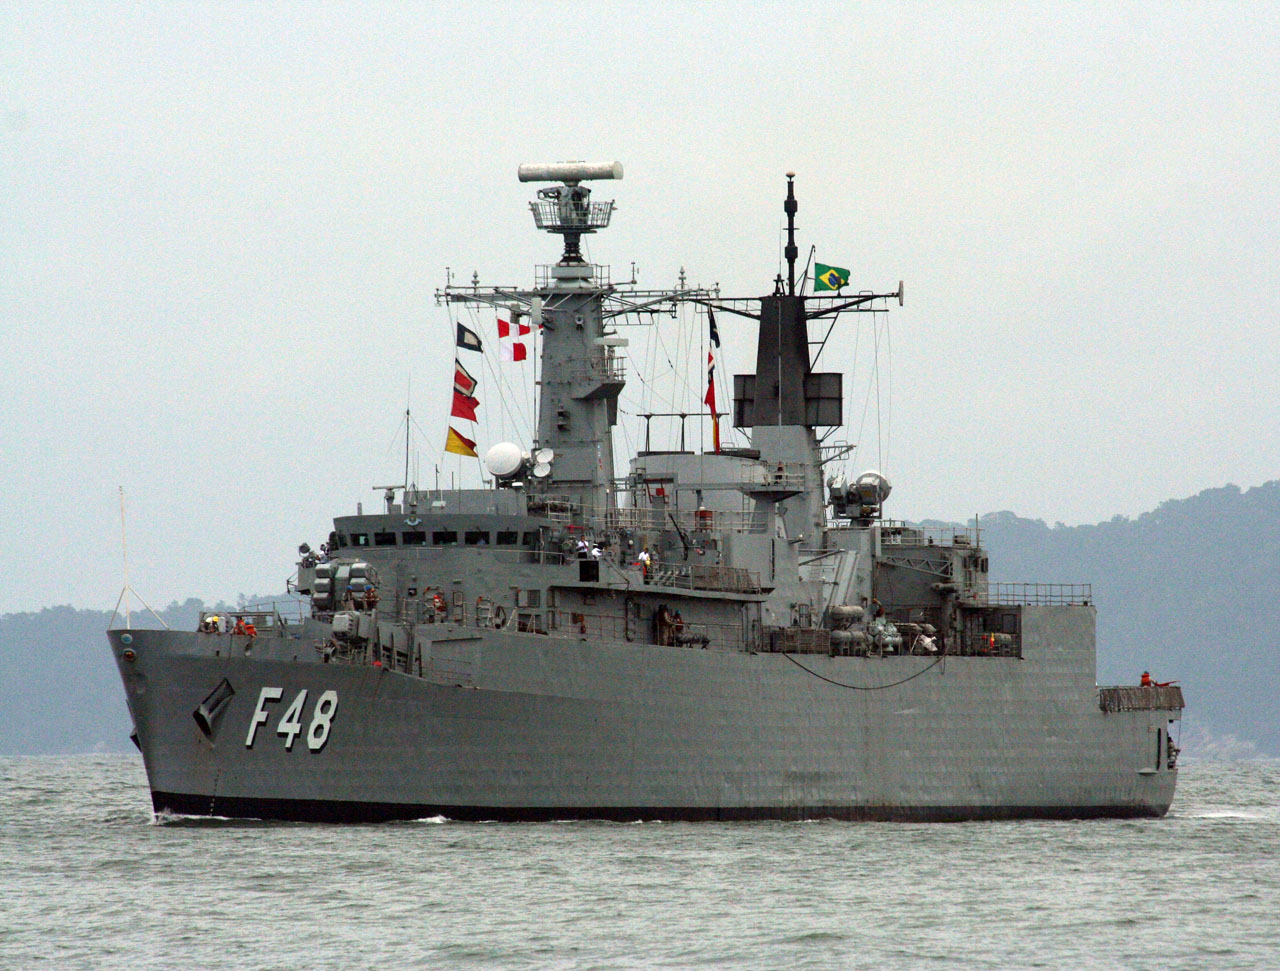 http://www.naval.com.br/blog/wp-content/uploads/2009/06/fragata-bosisio-f48.jpg